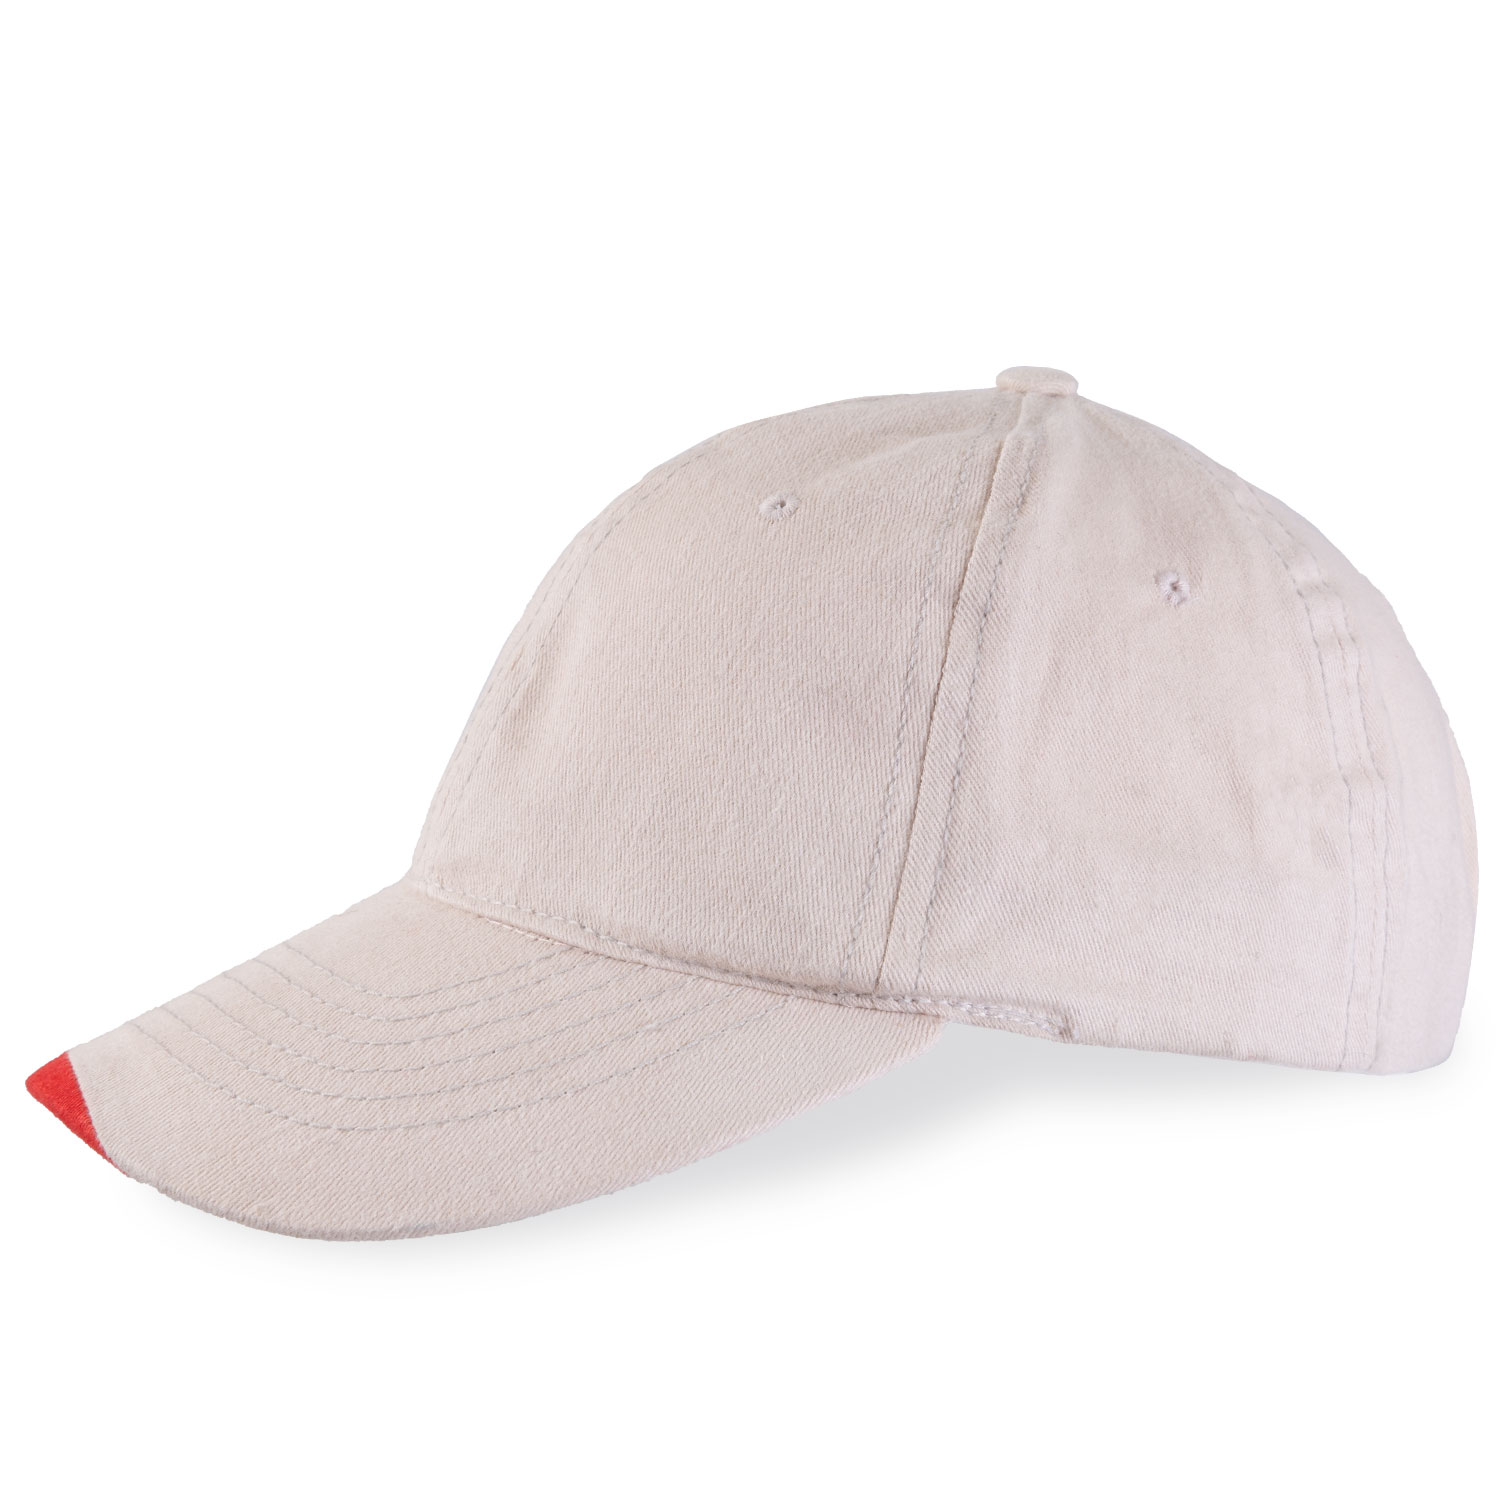 Lightweight cotton cap with contrast trim